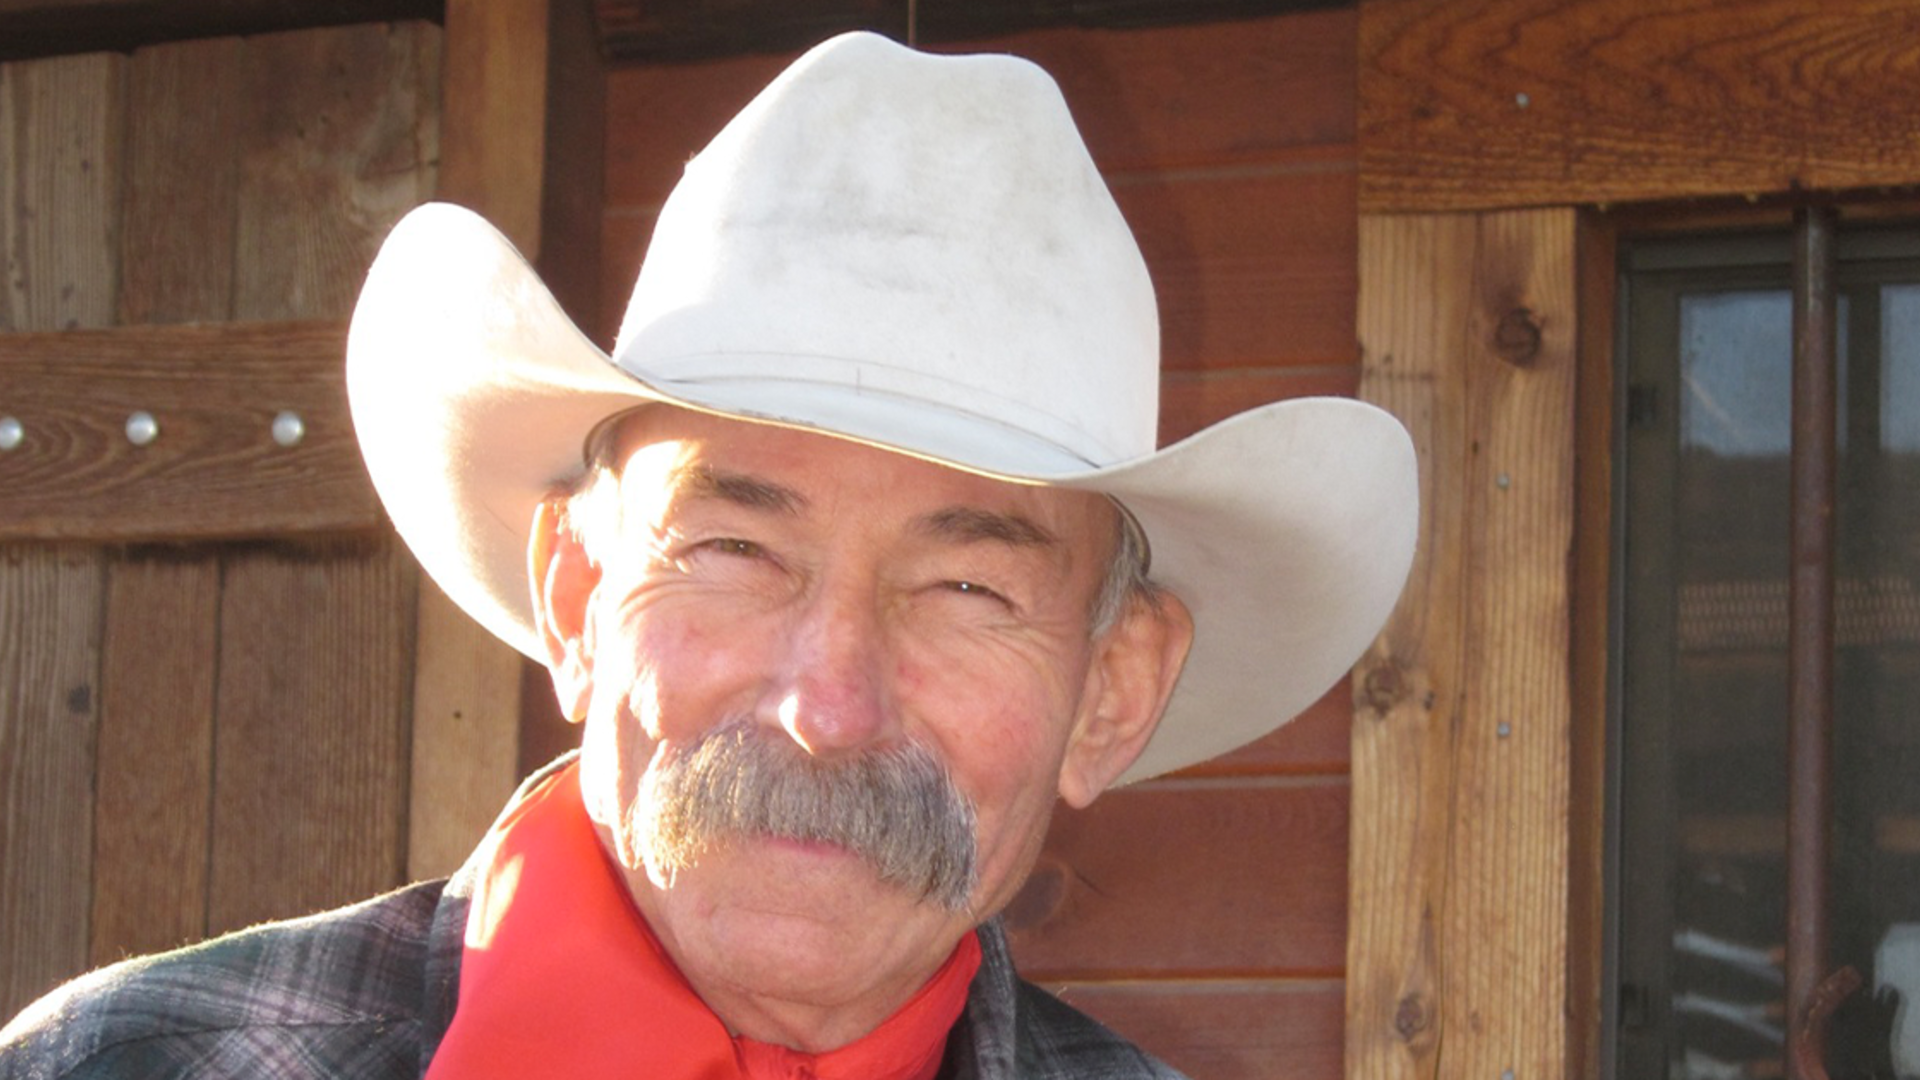 Rural America Mourns Passing of Cowboy Poet Baxter Black